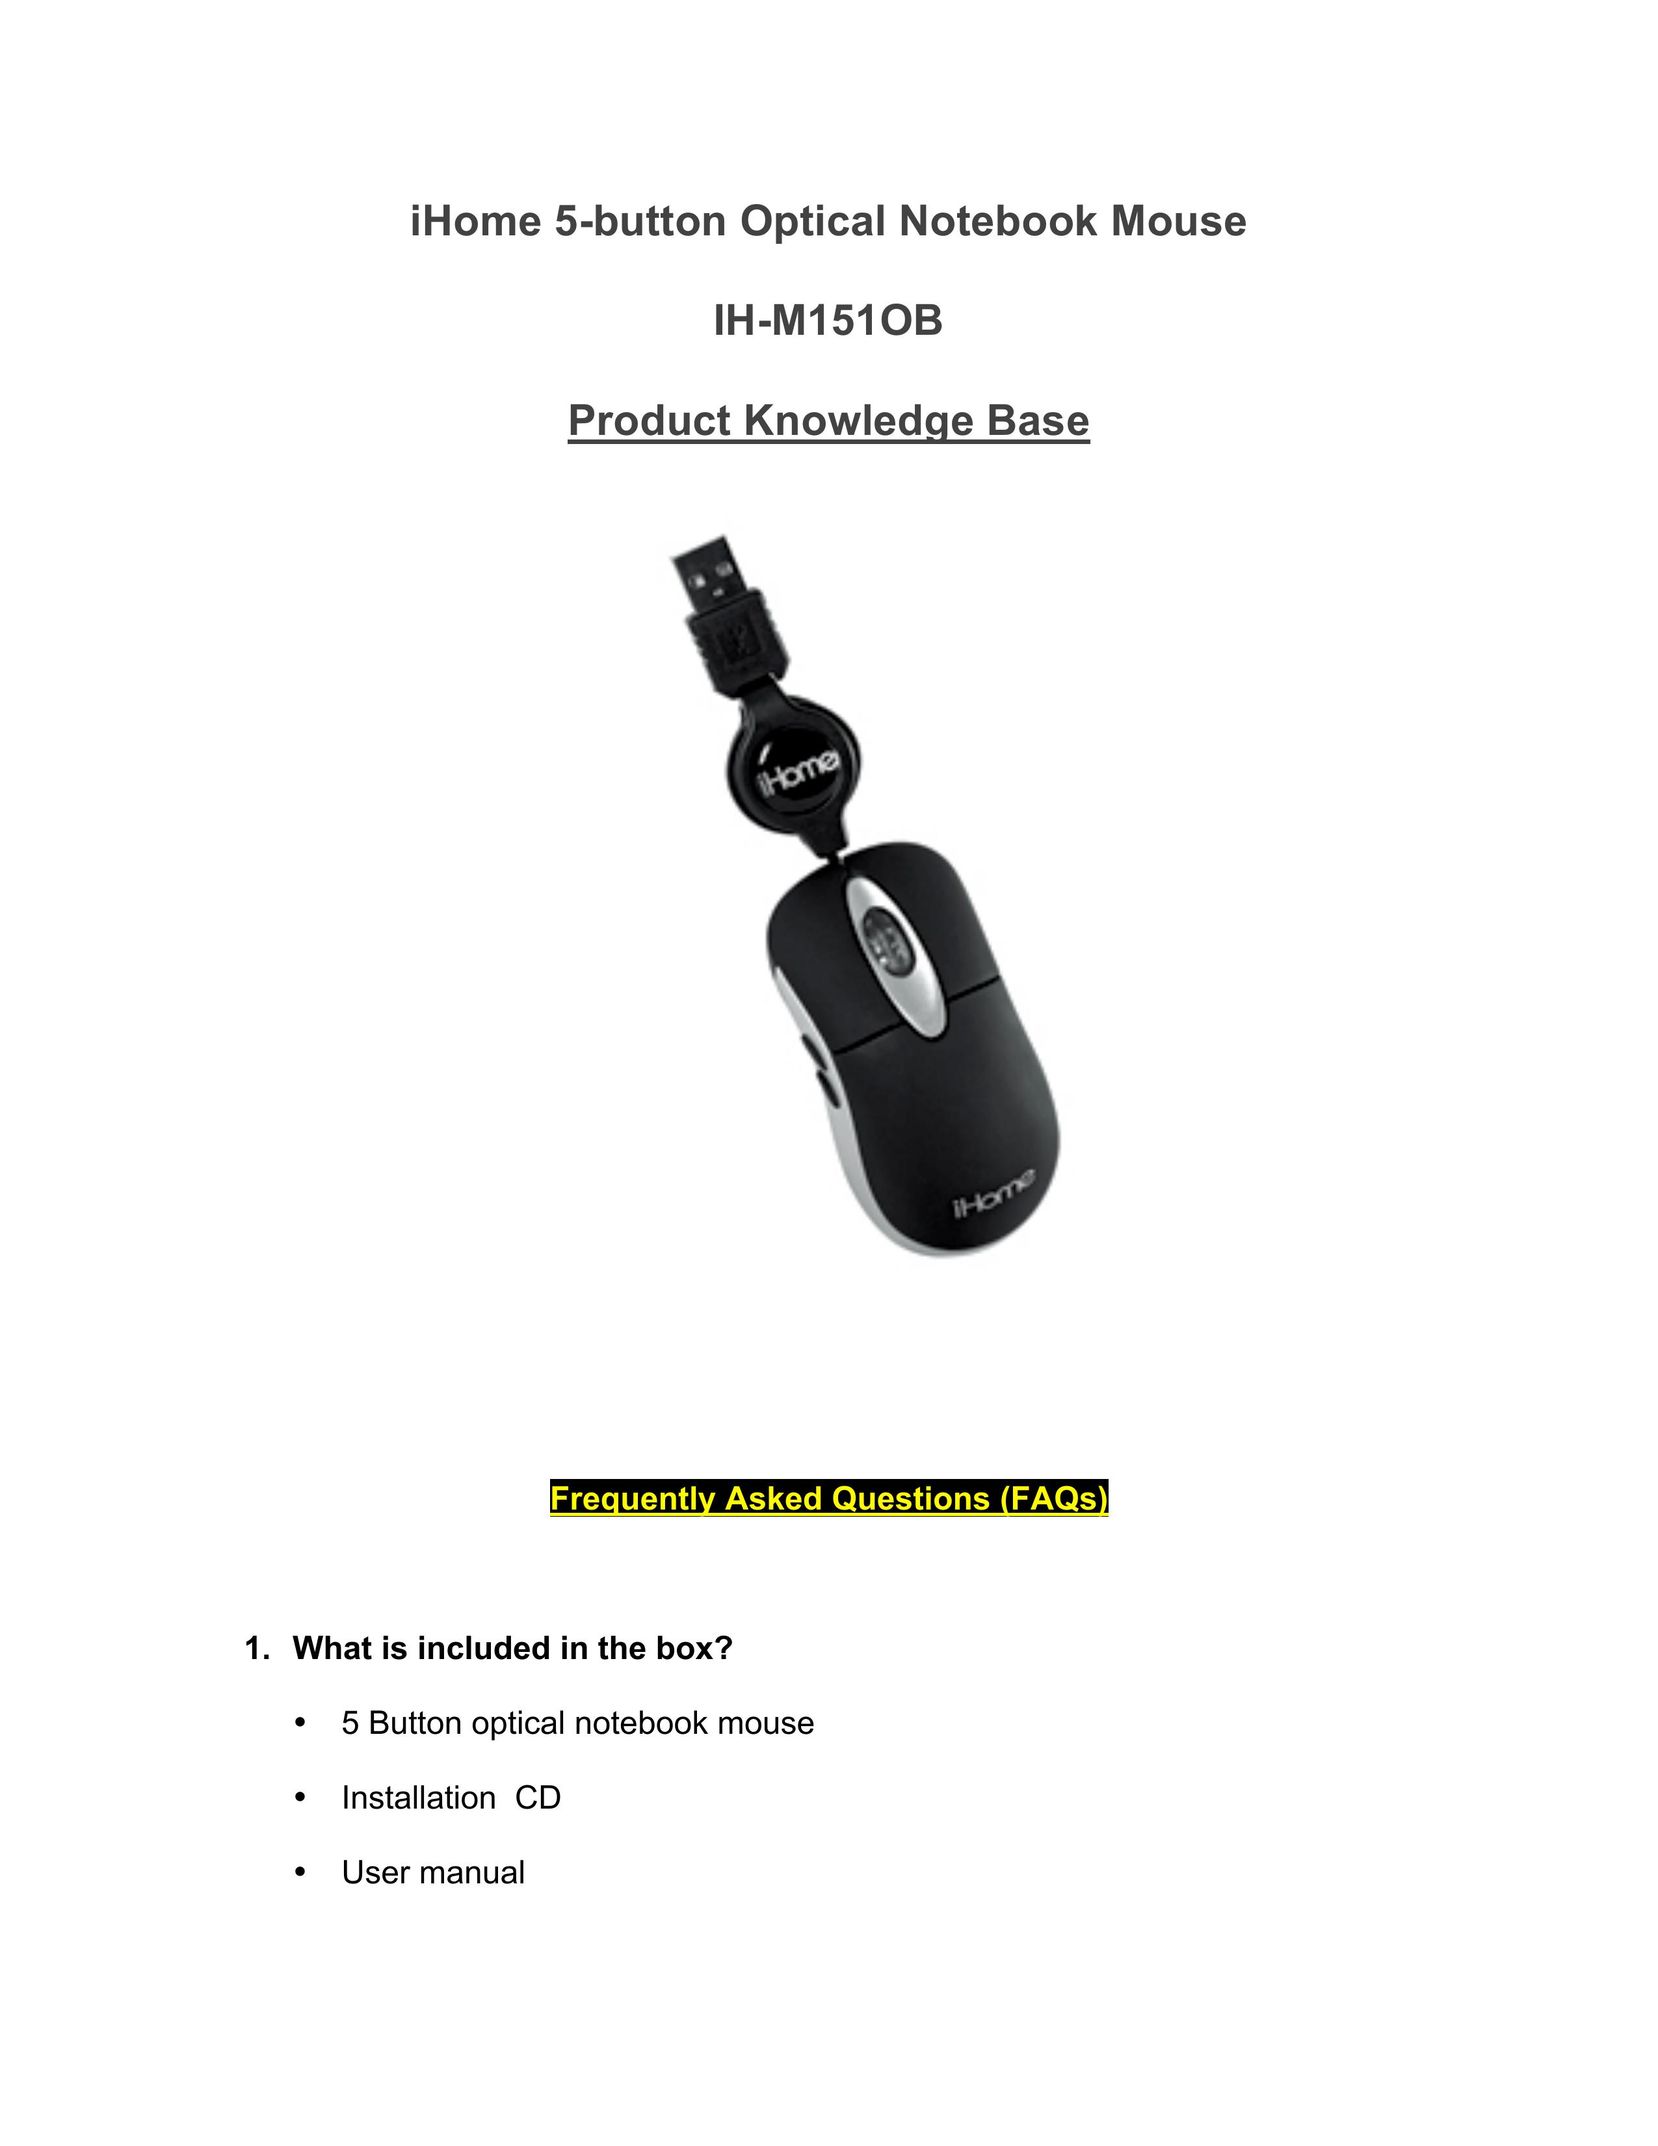 iHome IH-M151OB Mouse User Manual